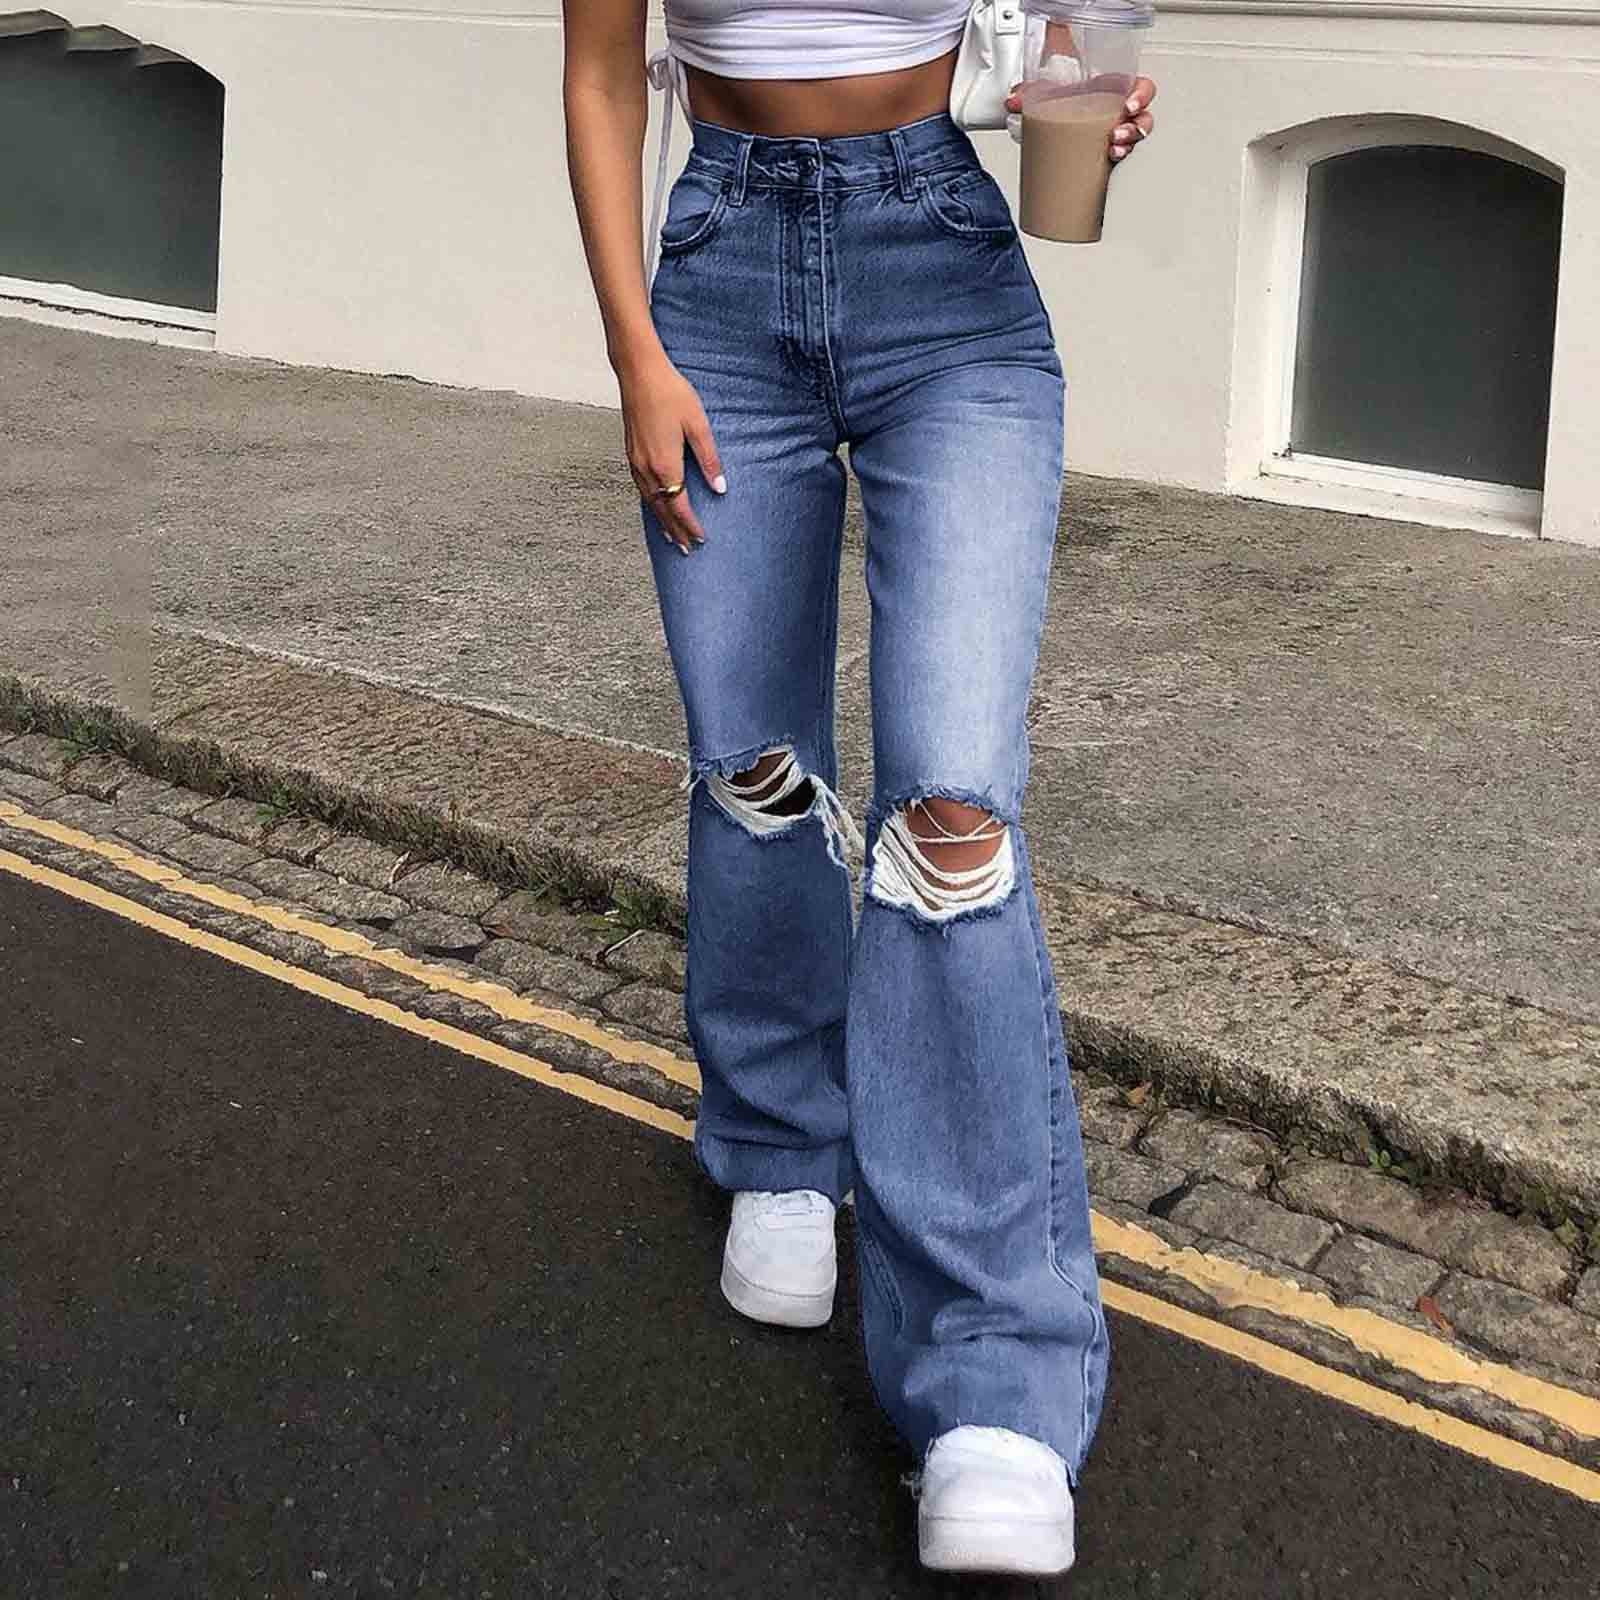 TIANEK Bootcut Jeans for Women Fashion Full-Length High Waist